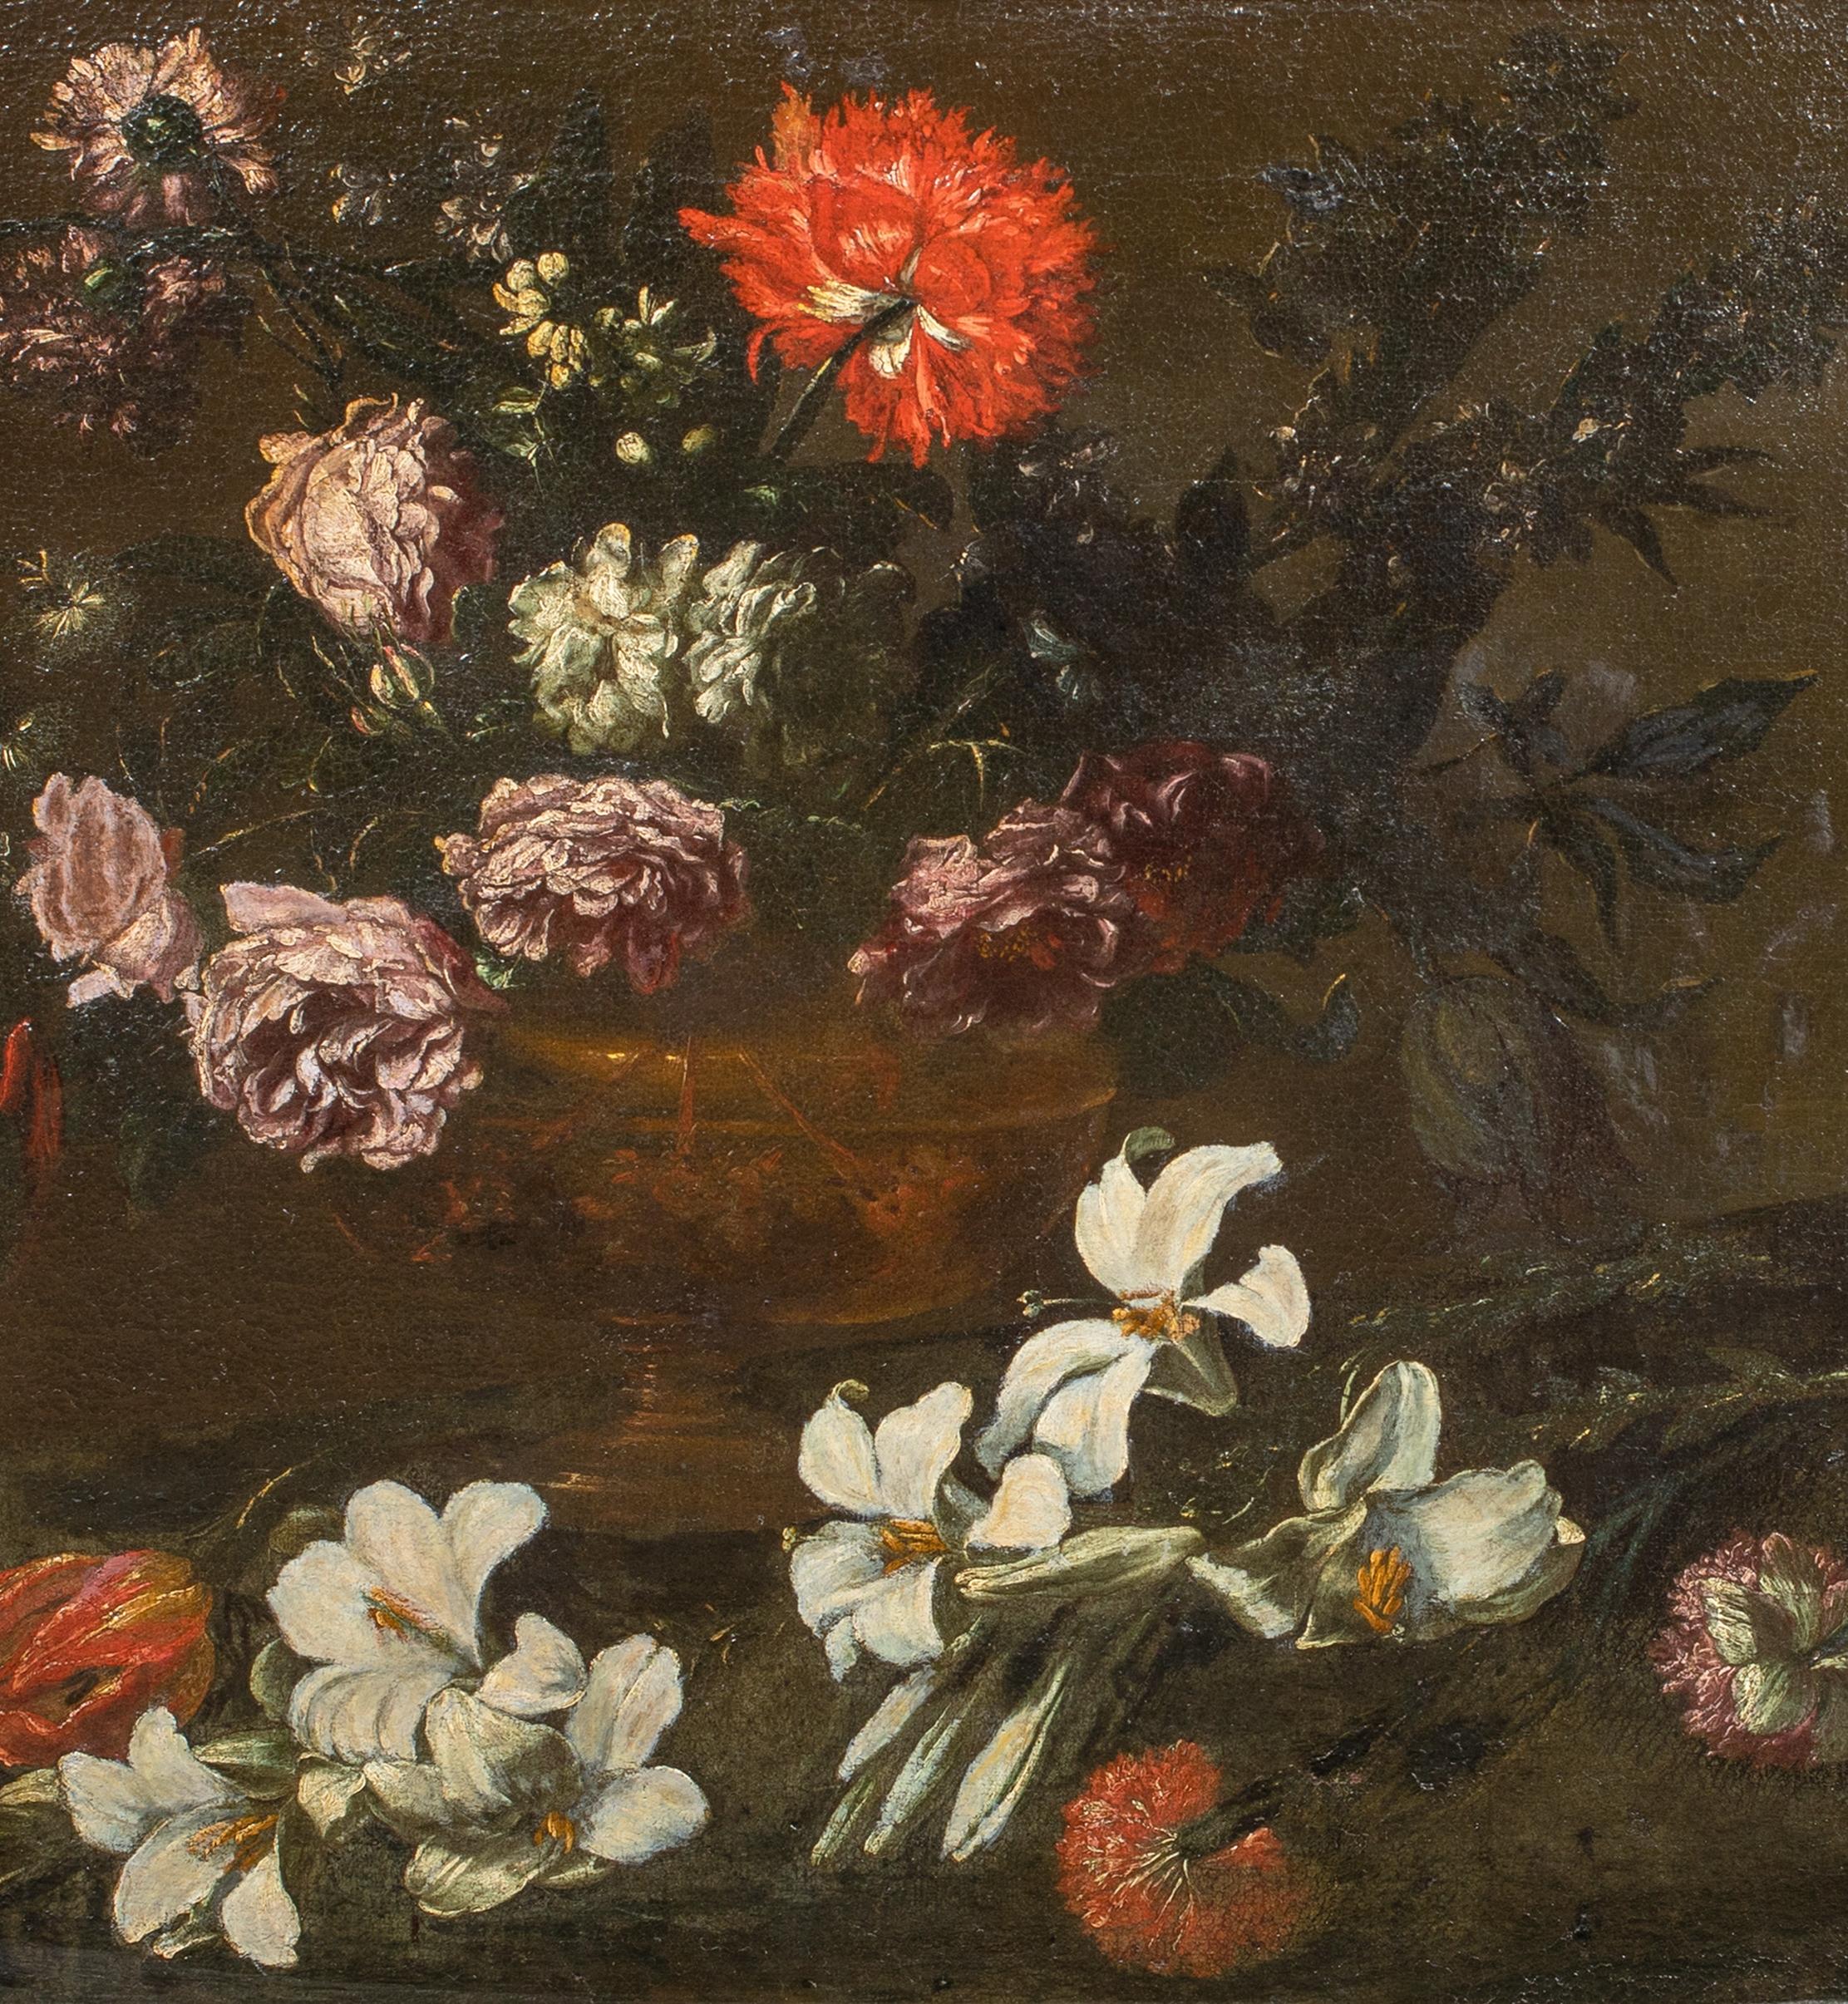 17th century flowers